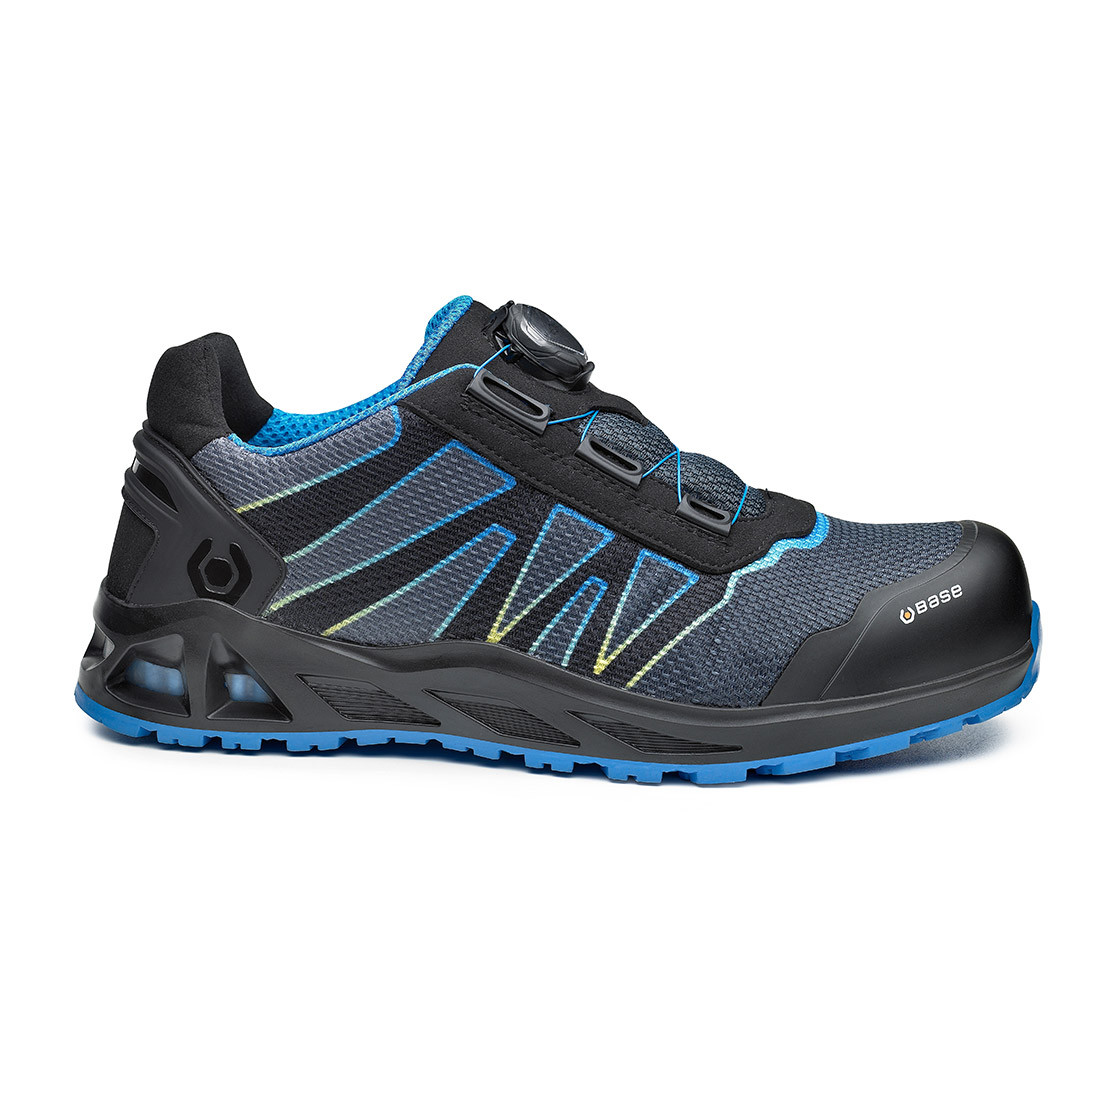 Pantofi K-Energy S3 HRO SRC - Incaltaminte de protectie | Bocanci, Pantofi, Sandale, Cizme